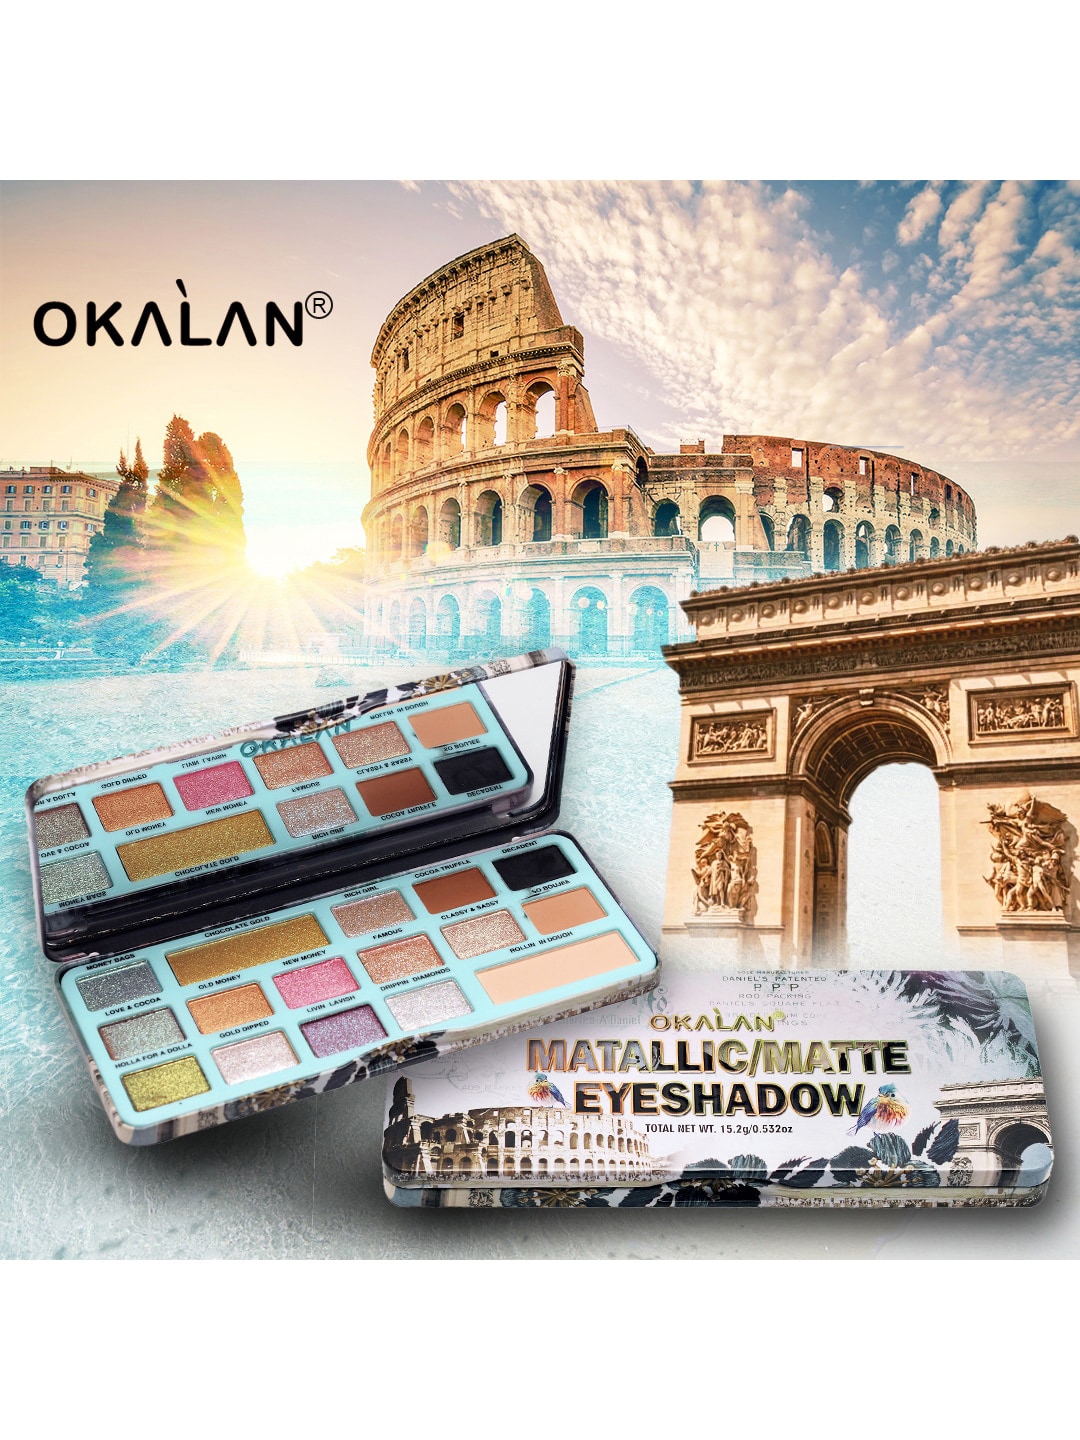 OKALAN Multicoloured Metallic/ Matte Eyeshadow 15 g Price in India